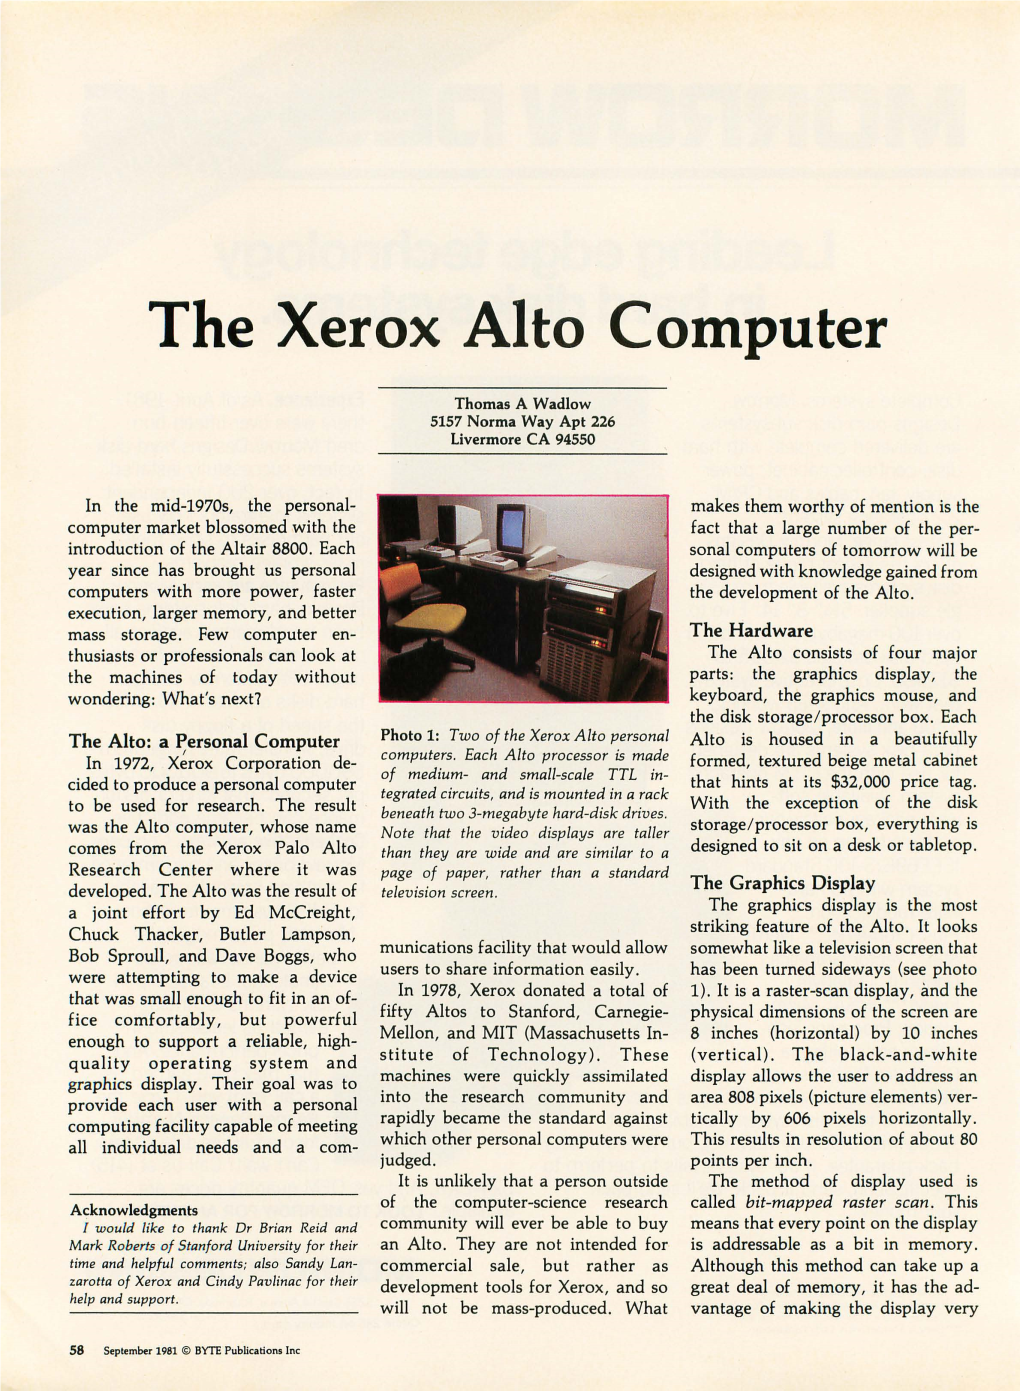 The Xerox Alto Computer, September 1981, BYTE Magazine